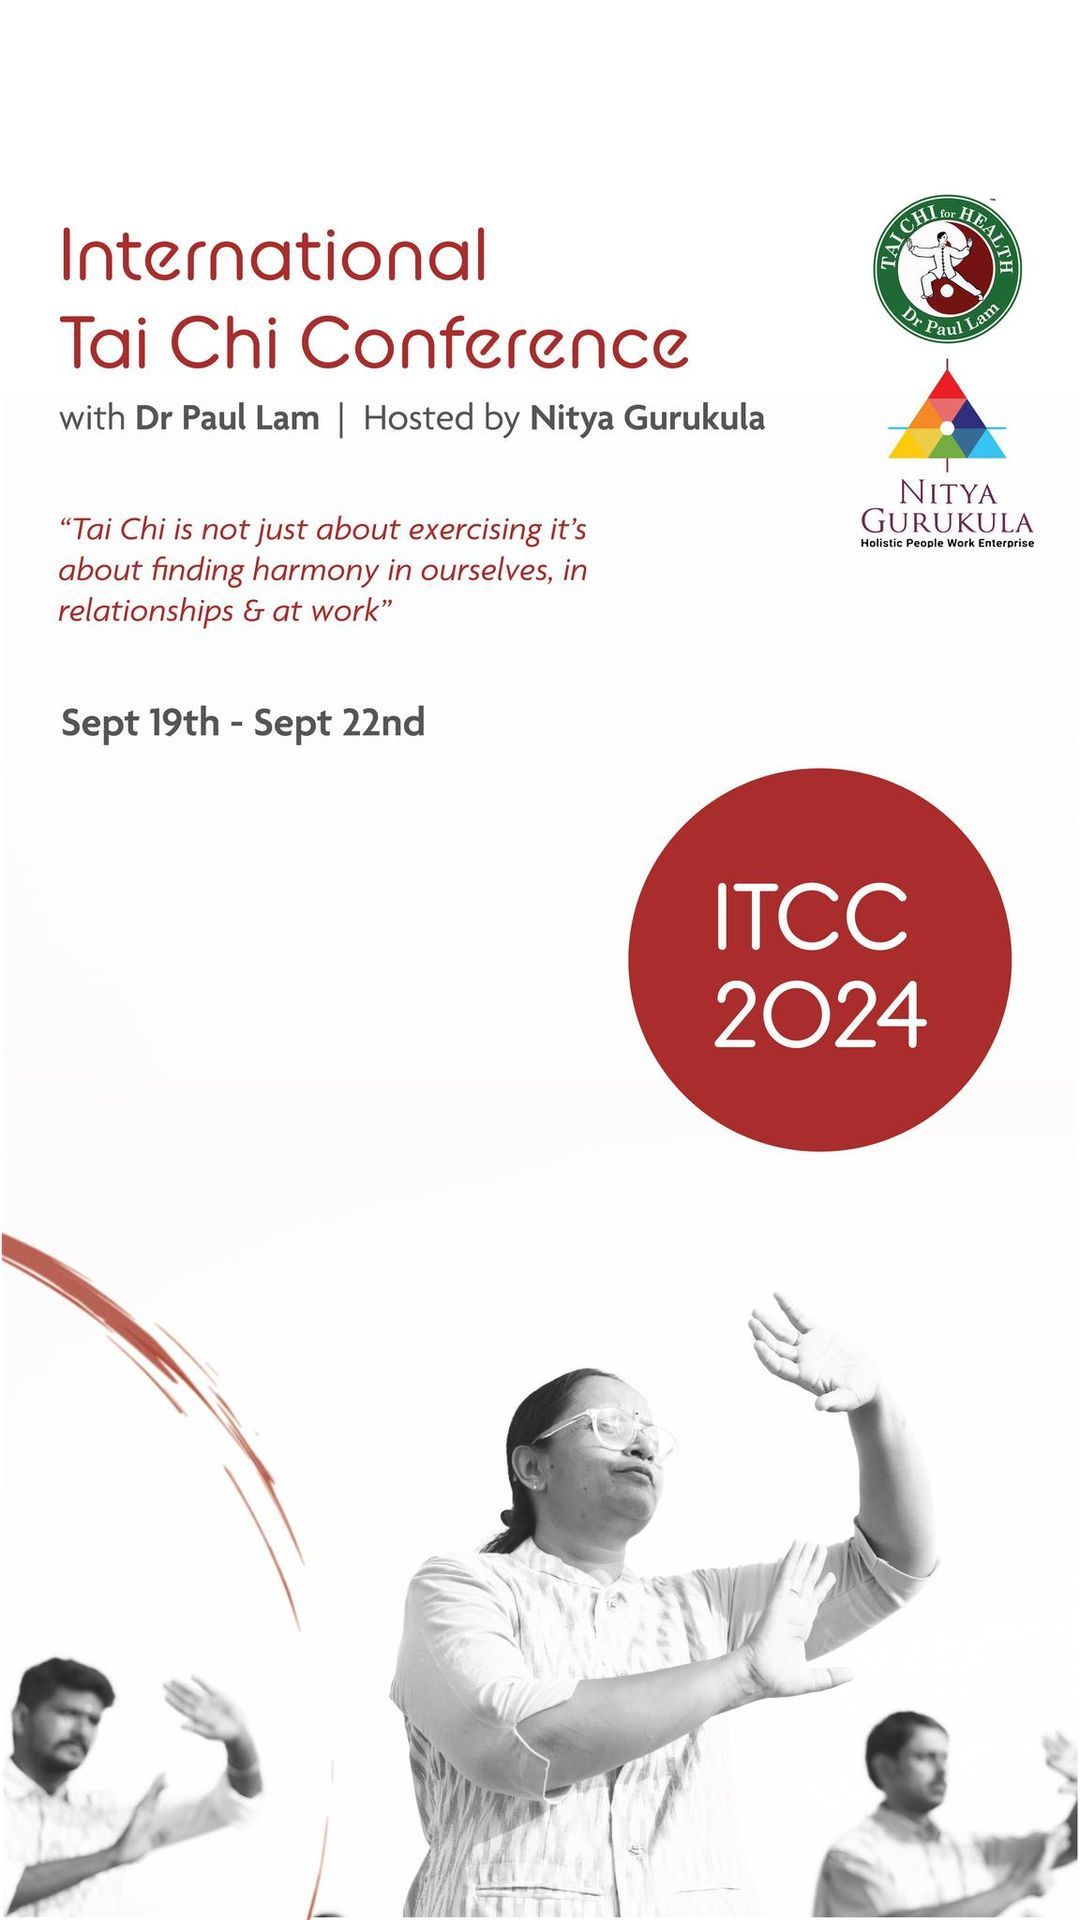 International Tai Chi Conference - ITCC 2024